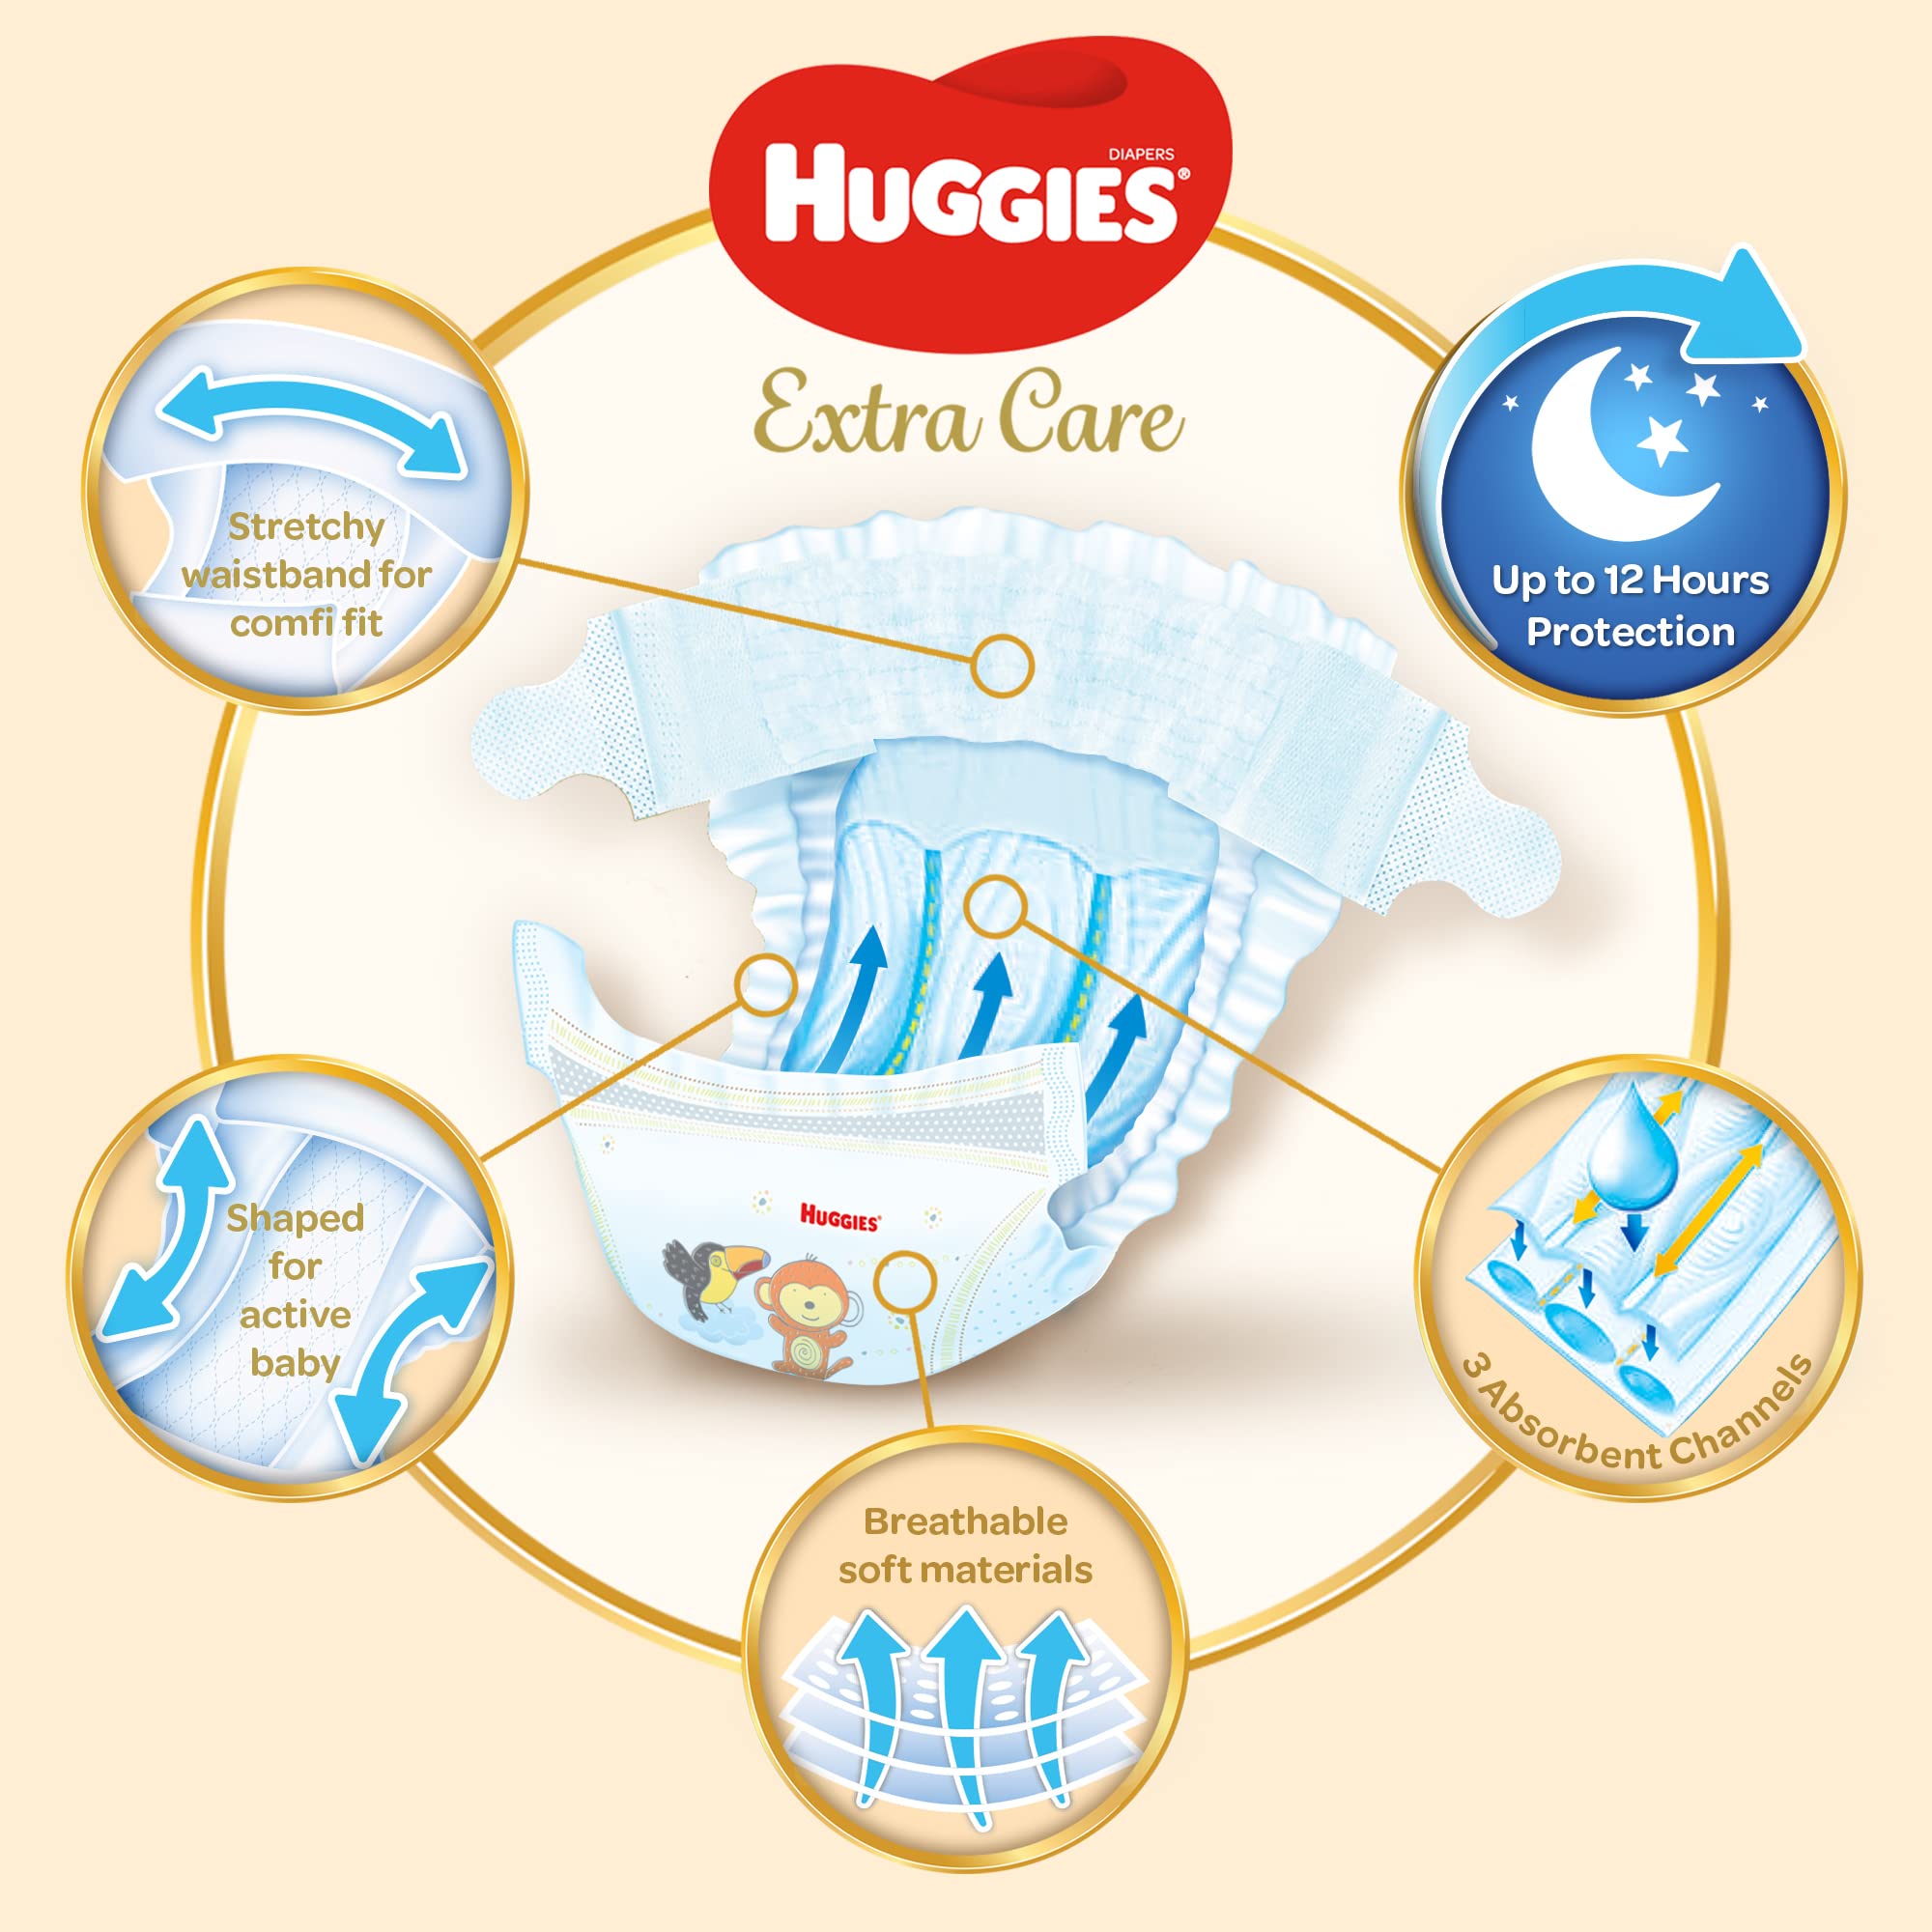 Huggies Extra Care Diaper Size 3 4-9kg 42pcs حفاضات اكسترا كير من هاجيز، مقاس 3، 4-9 كغم، 42 قطعة